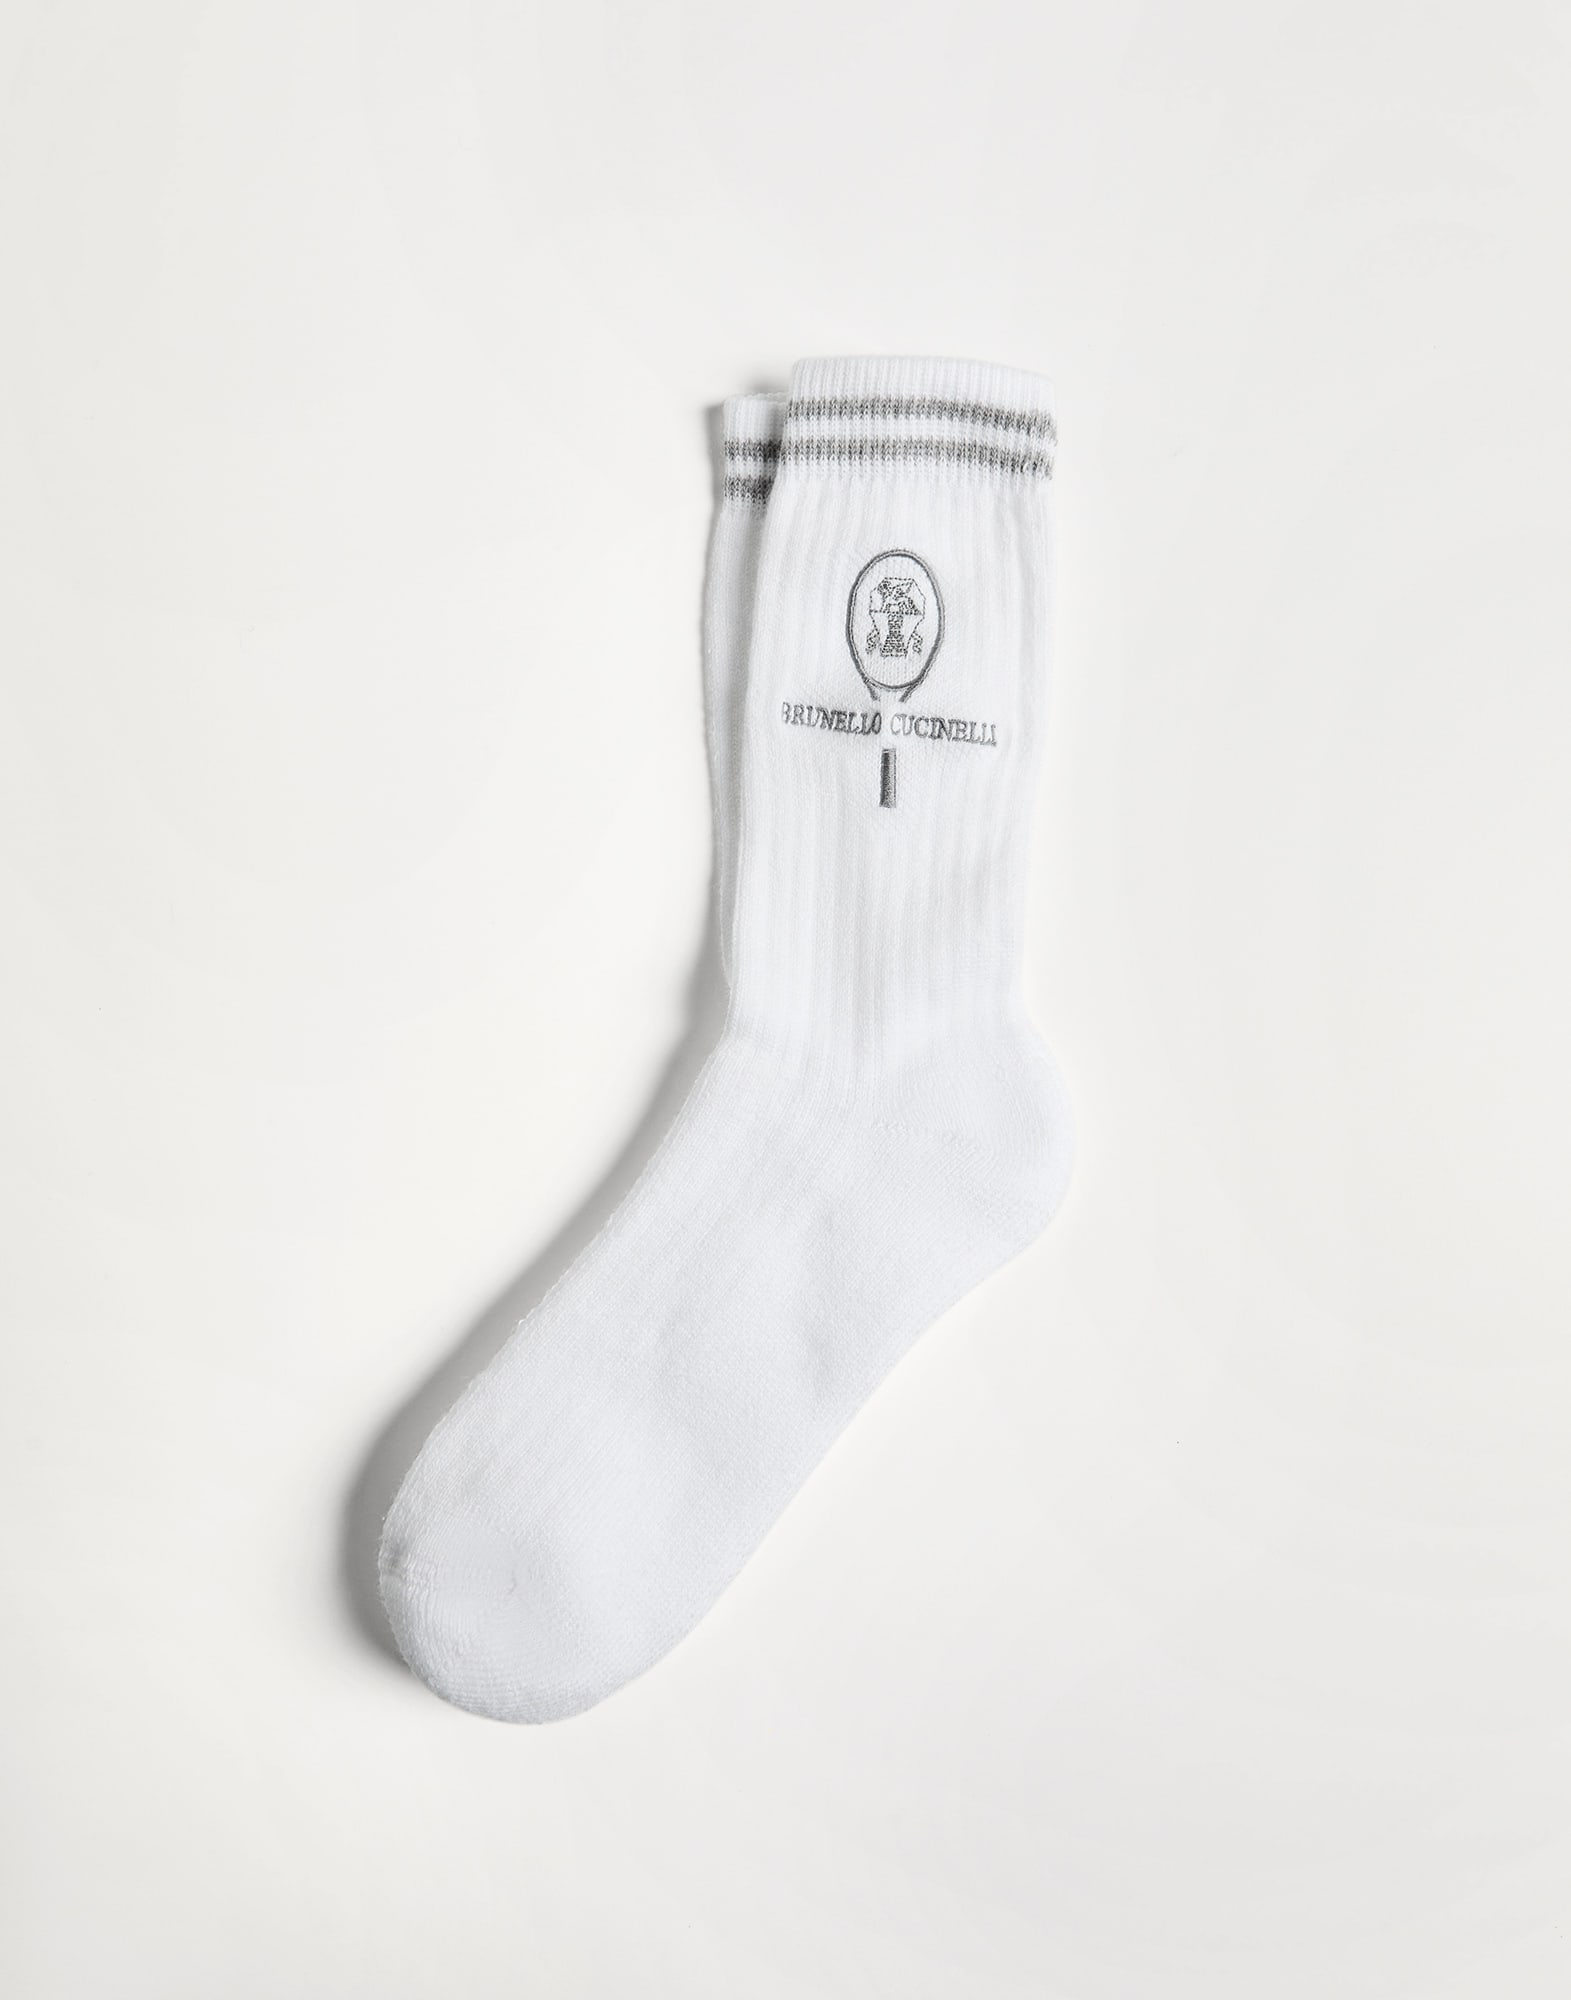 Socks with Tennis logo